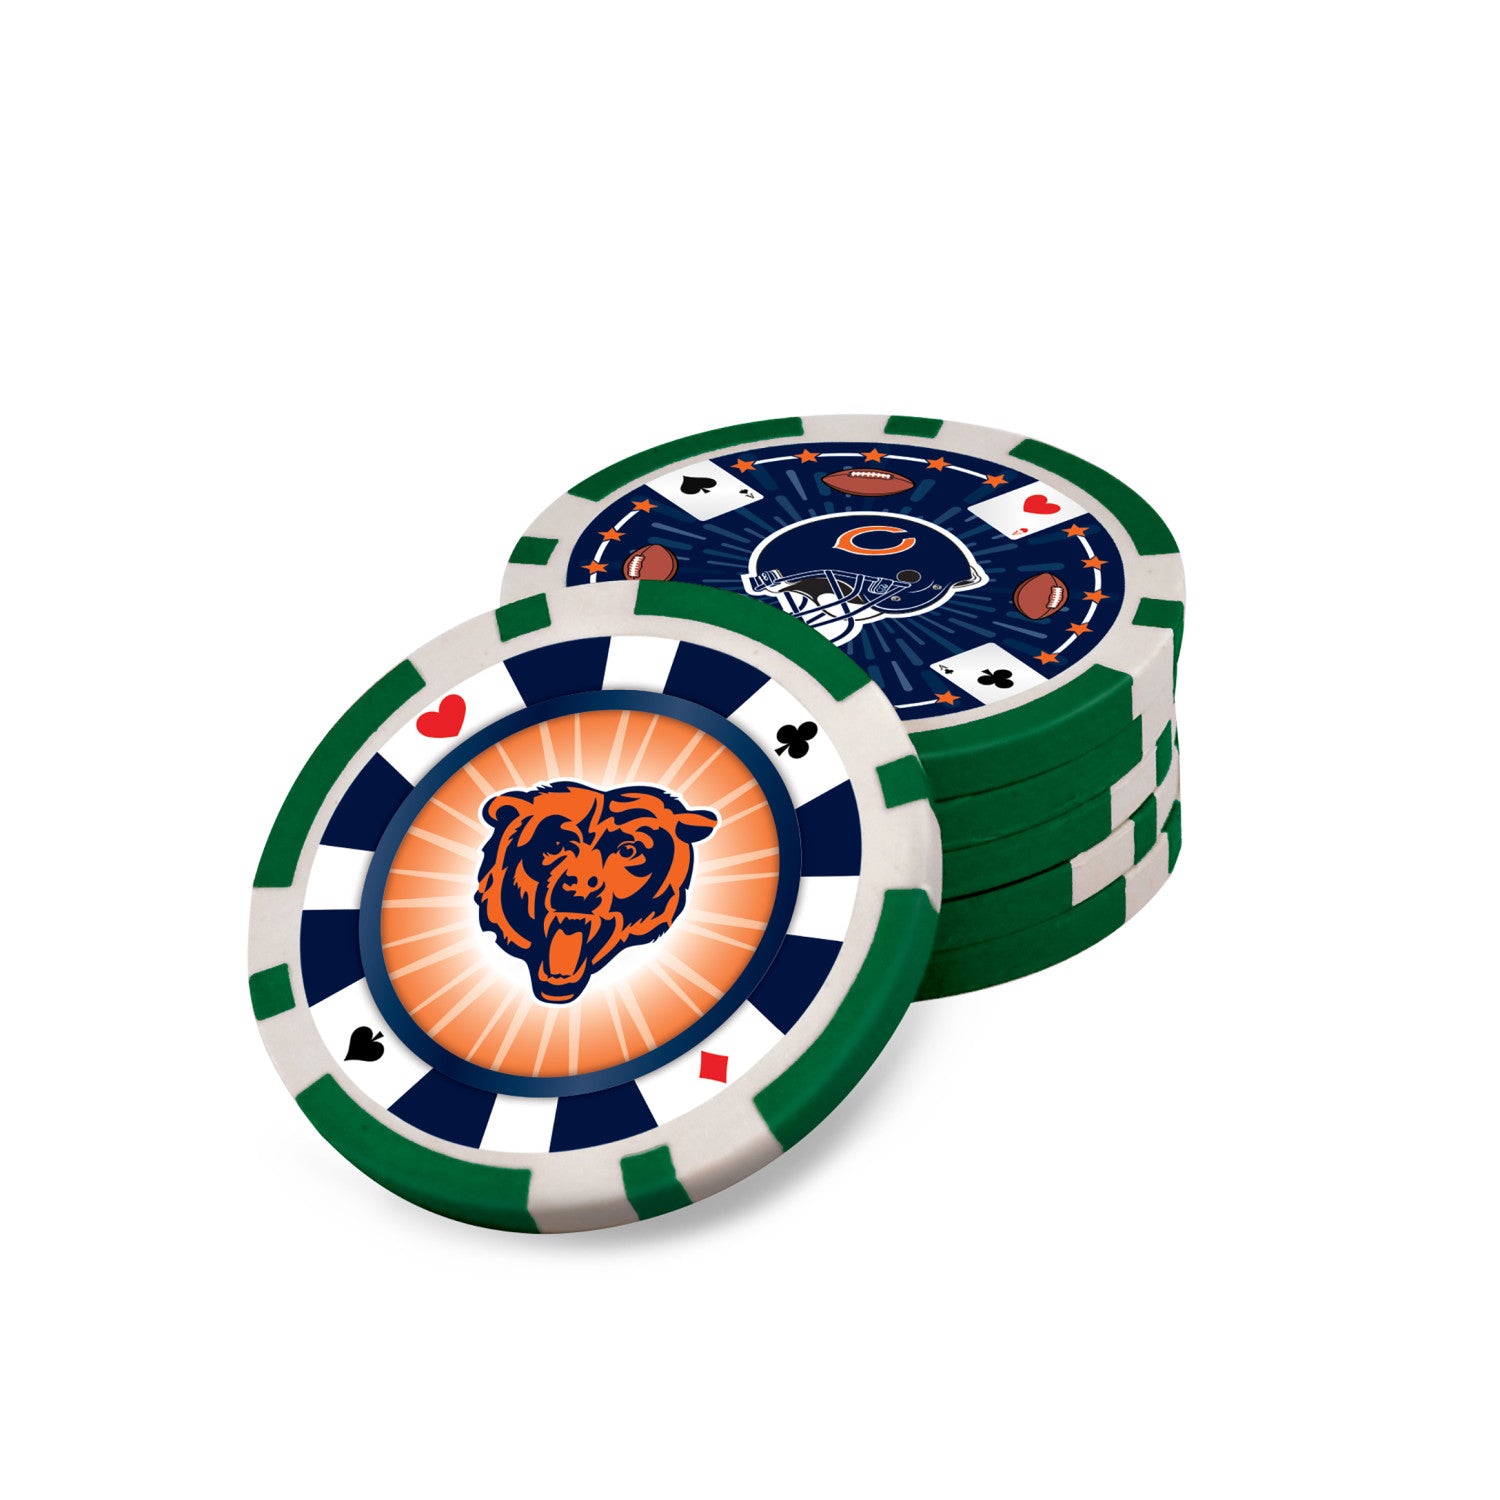 Chicago Bears Casino Style 300 Piece Poker Set